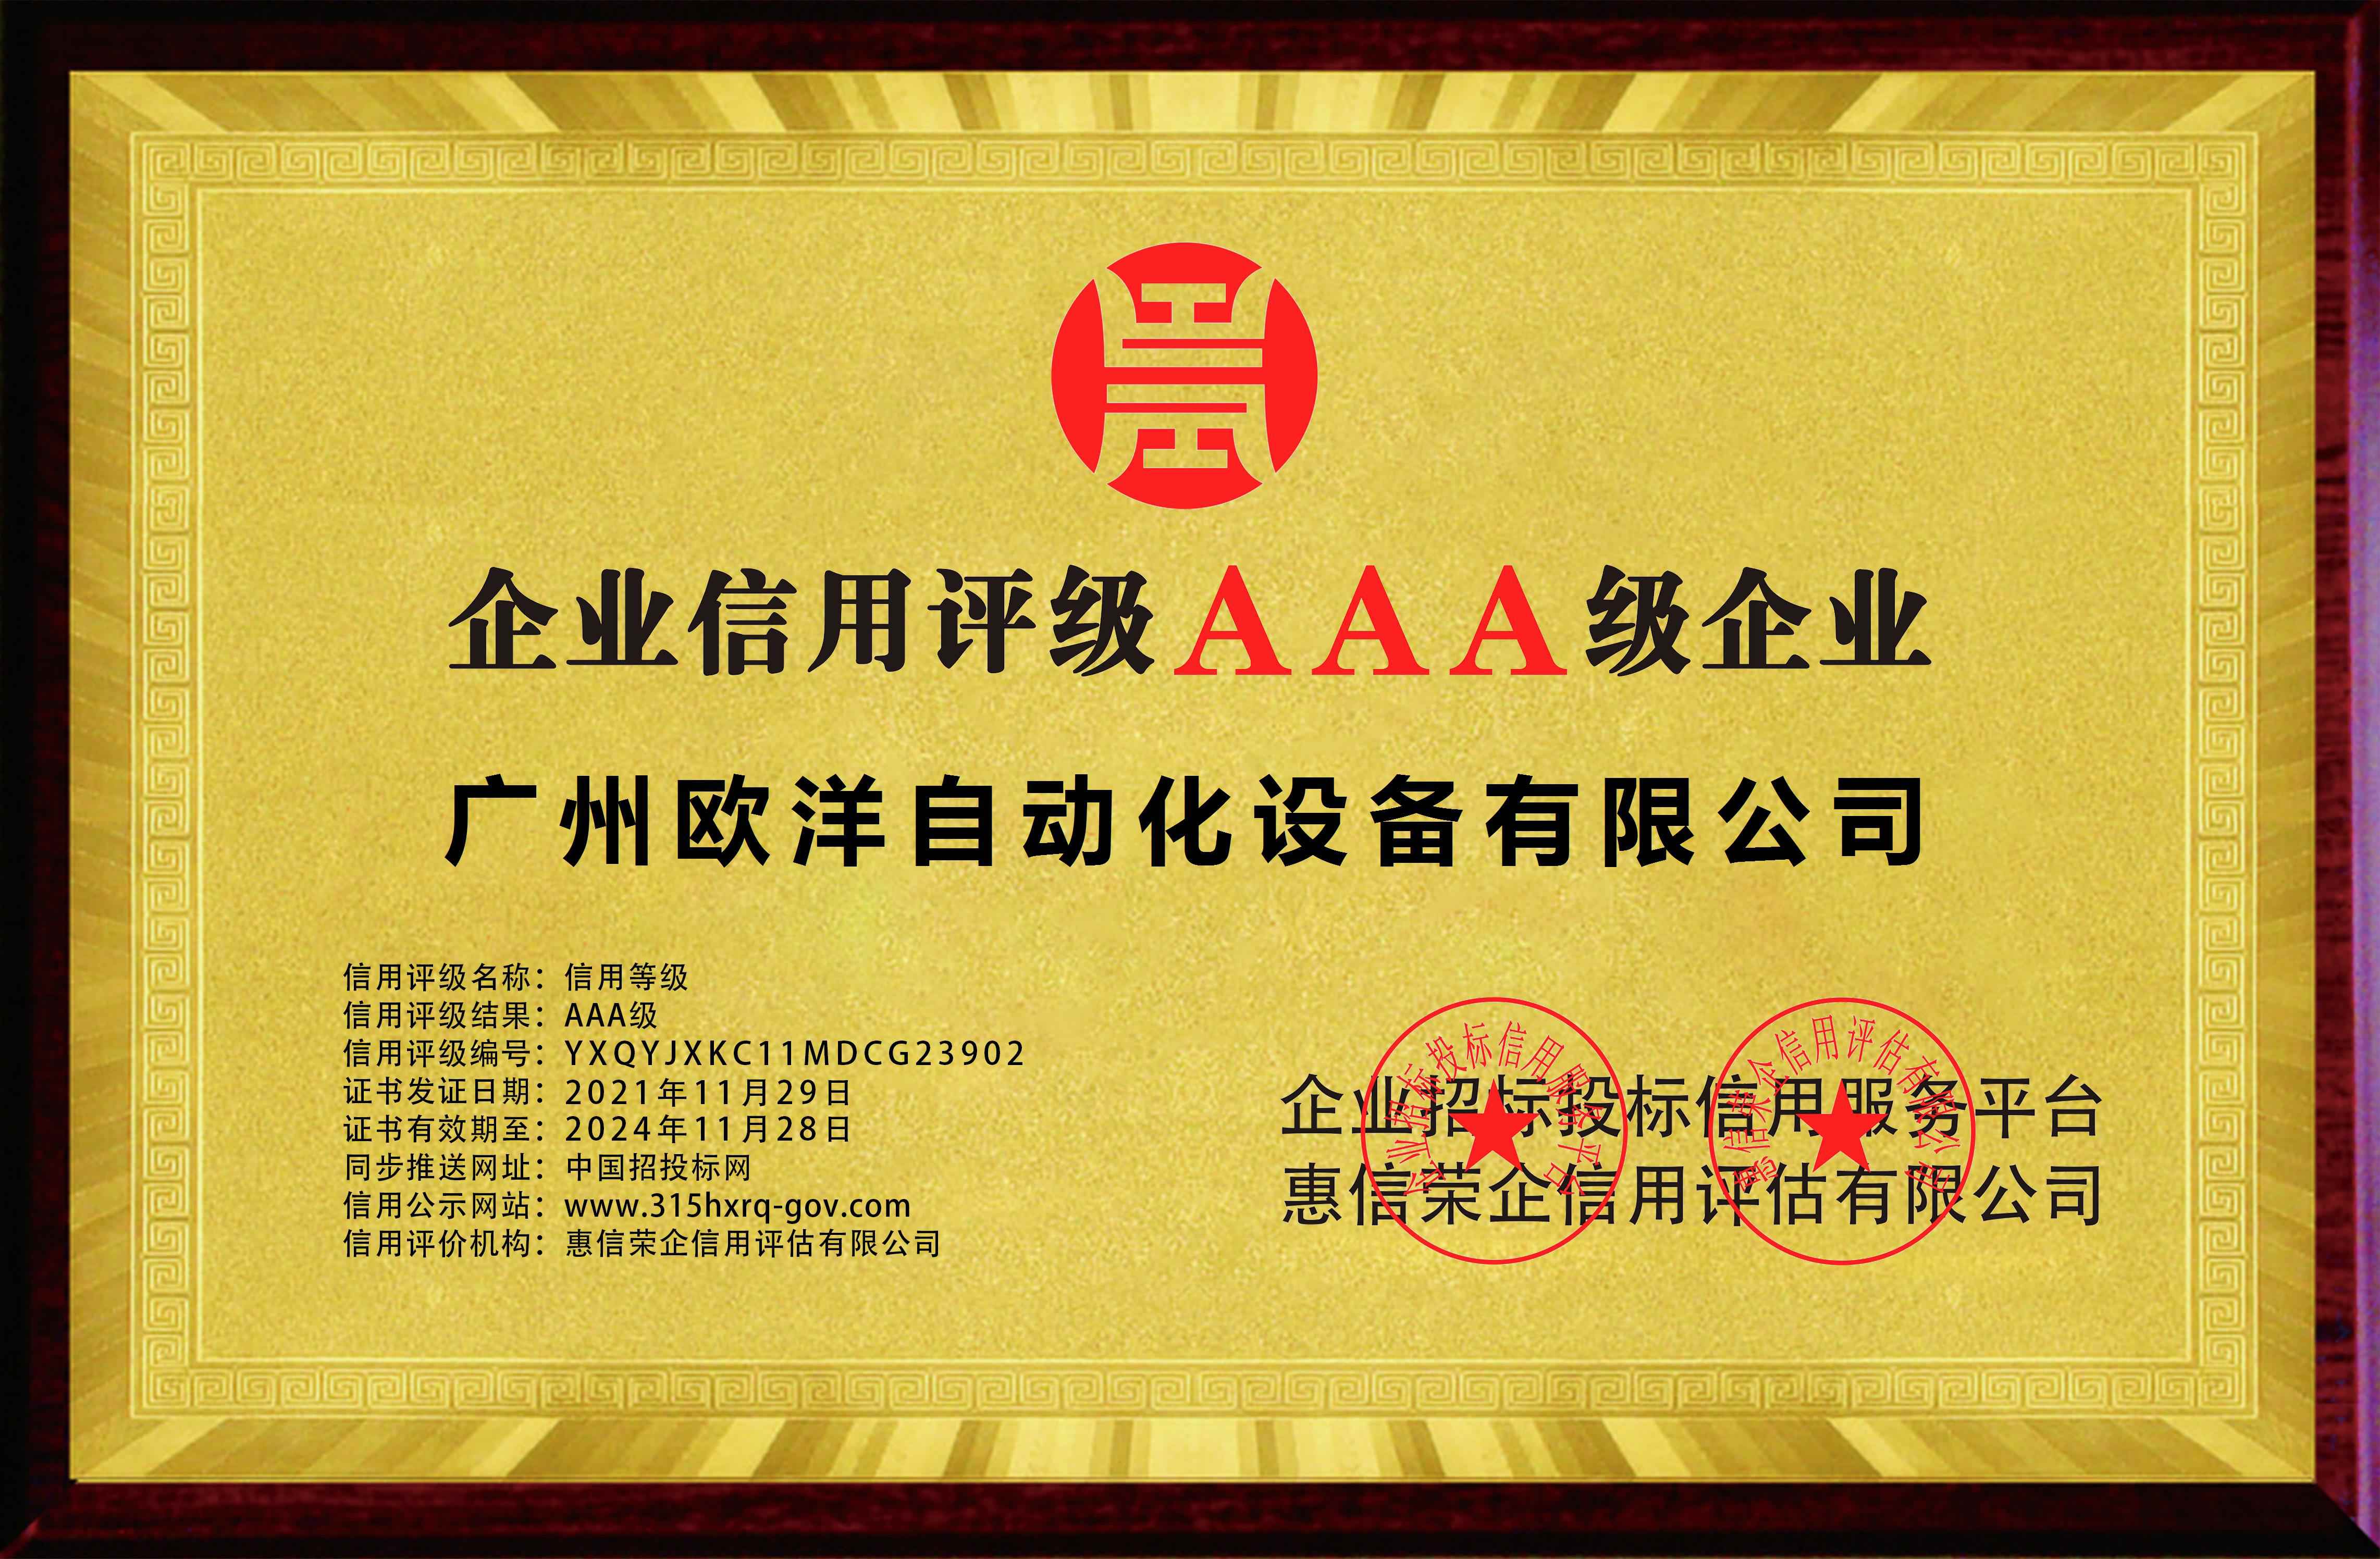 AAA级信用企业-广州欧洋自动化设备有限公司